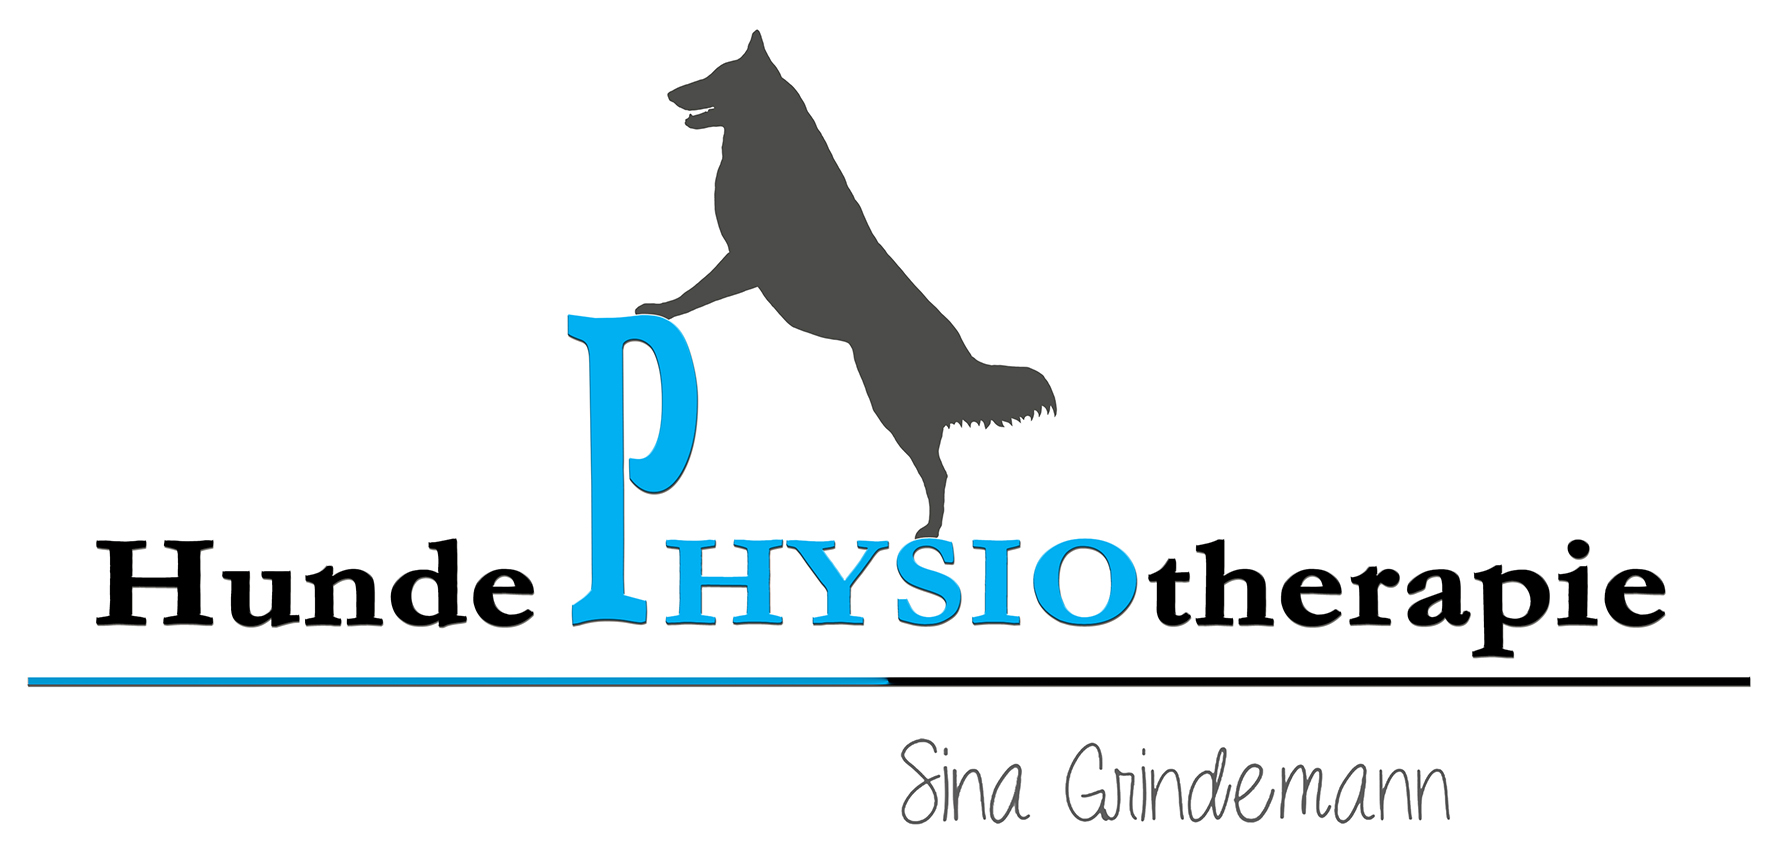 Hundephysiotherapie – Sina Grindemann